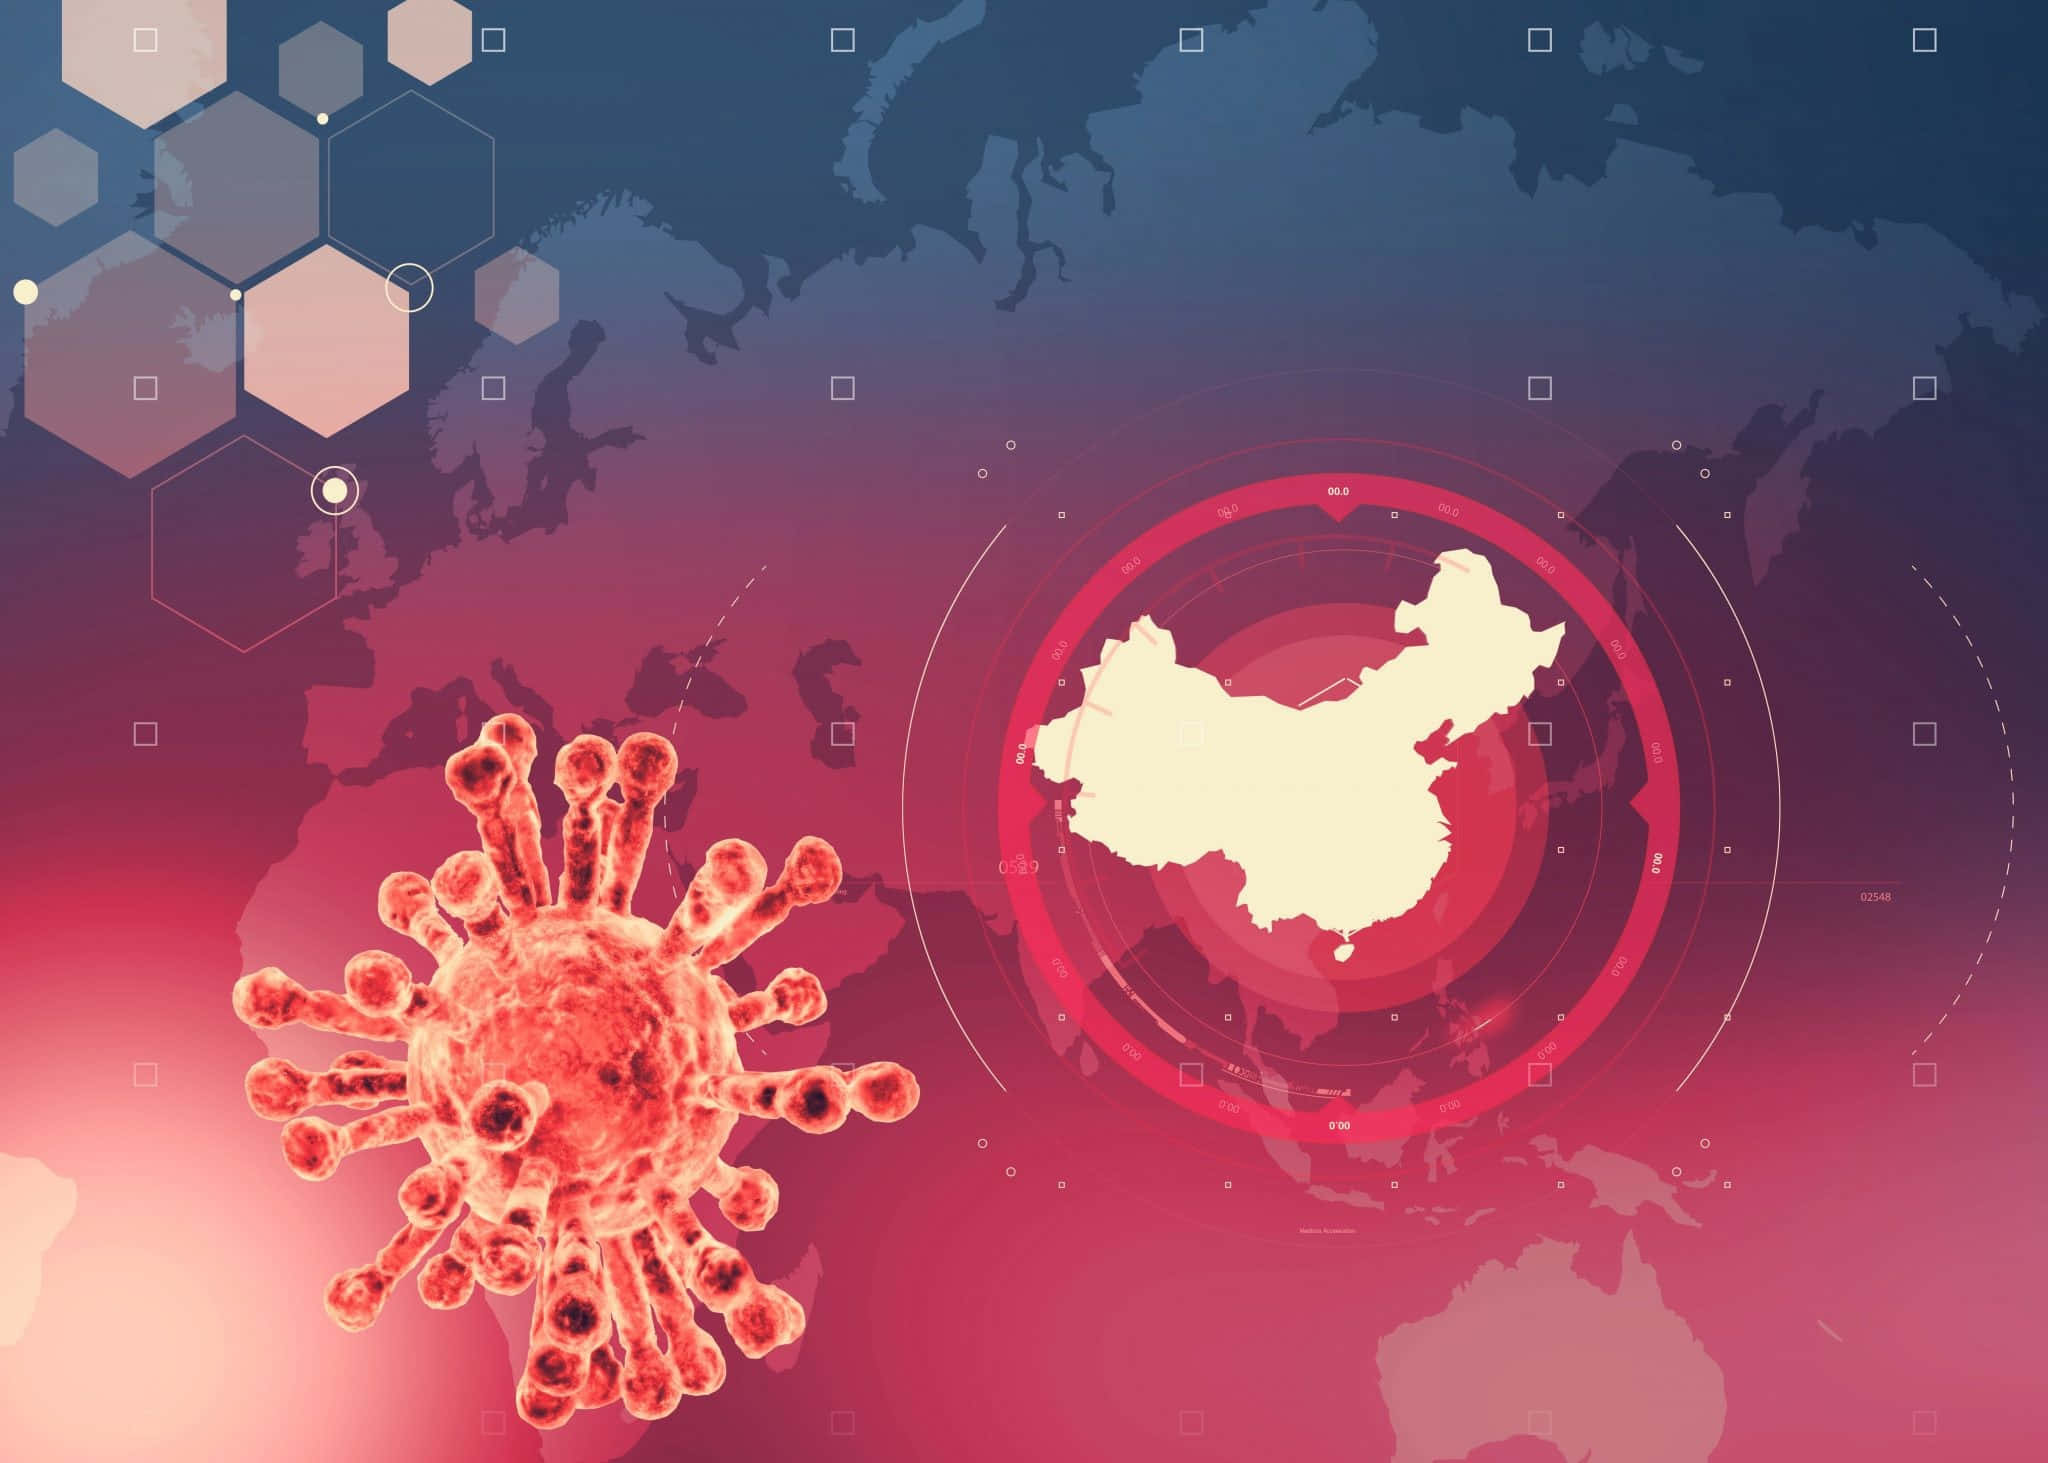 Caption: A Visualization of the Coronavirus Outbreak